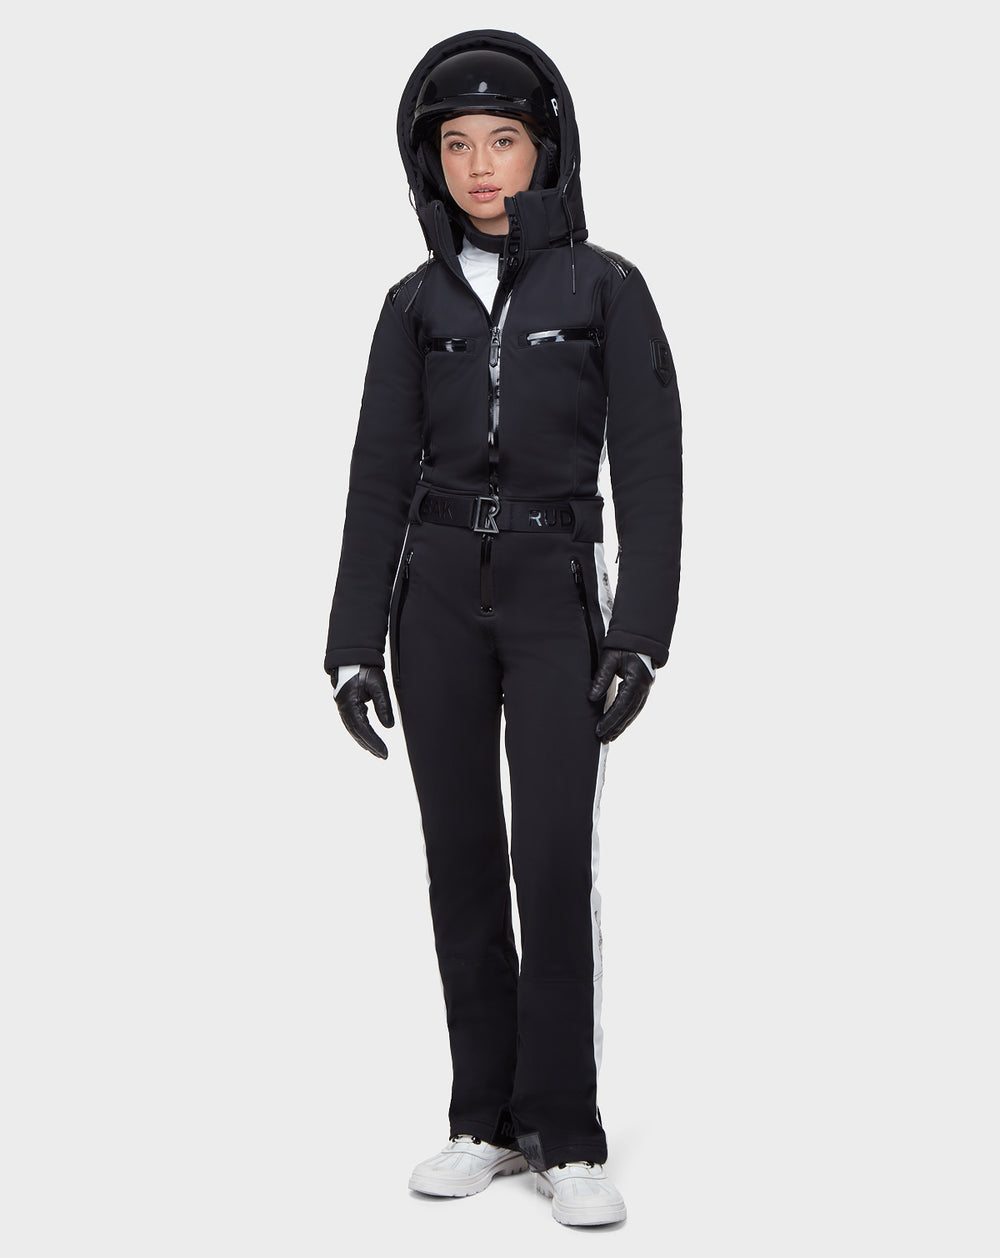 Women's Ski Suit in Black